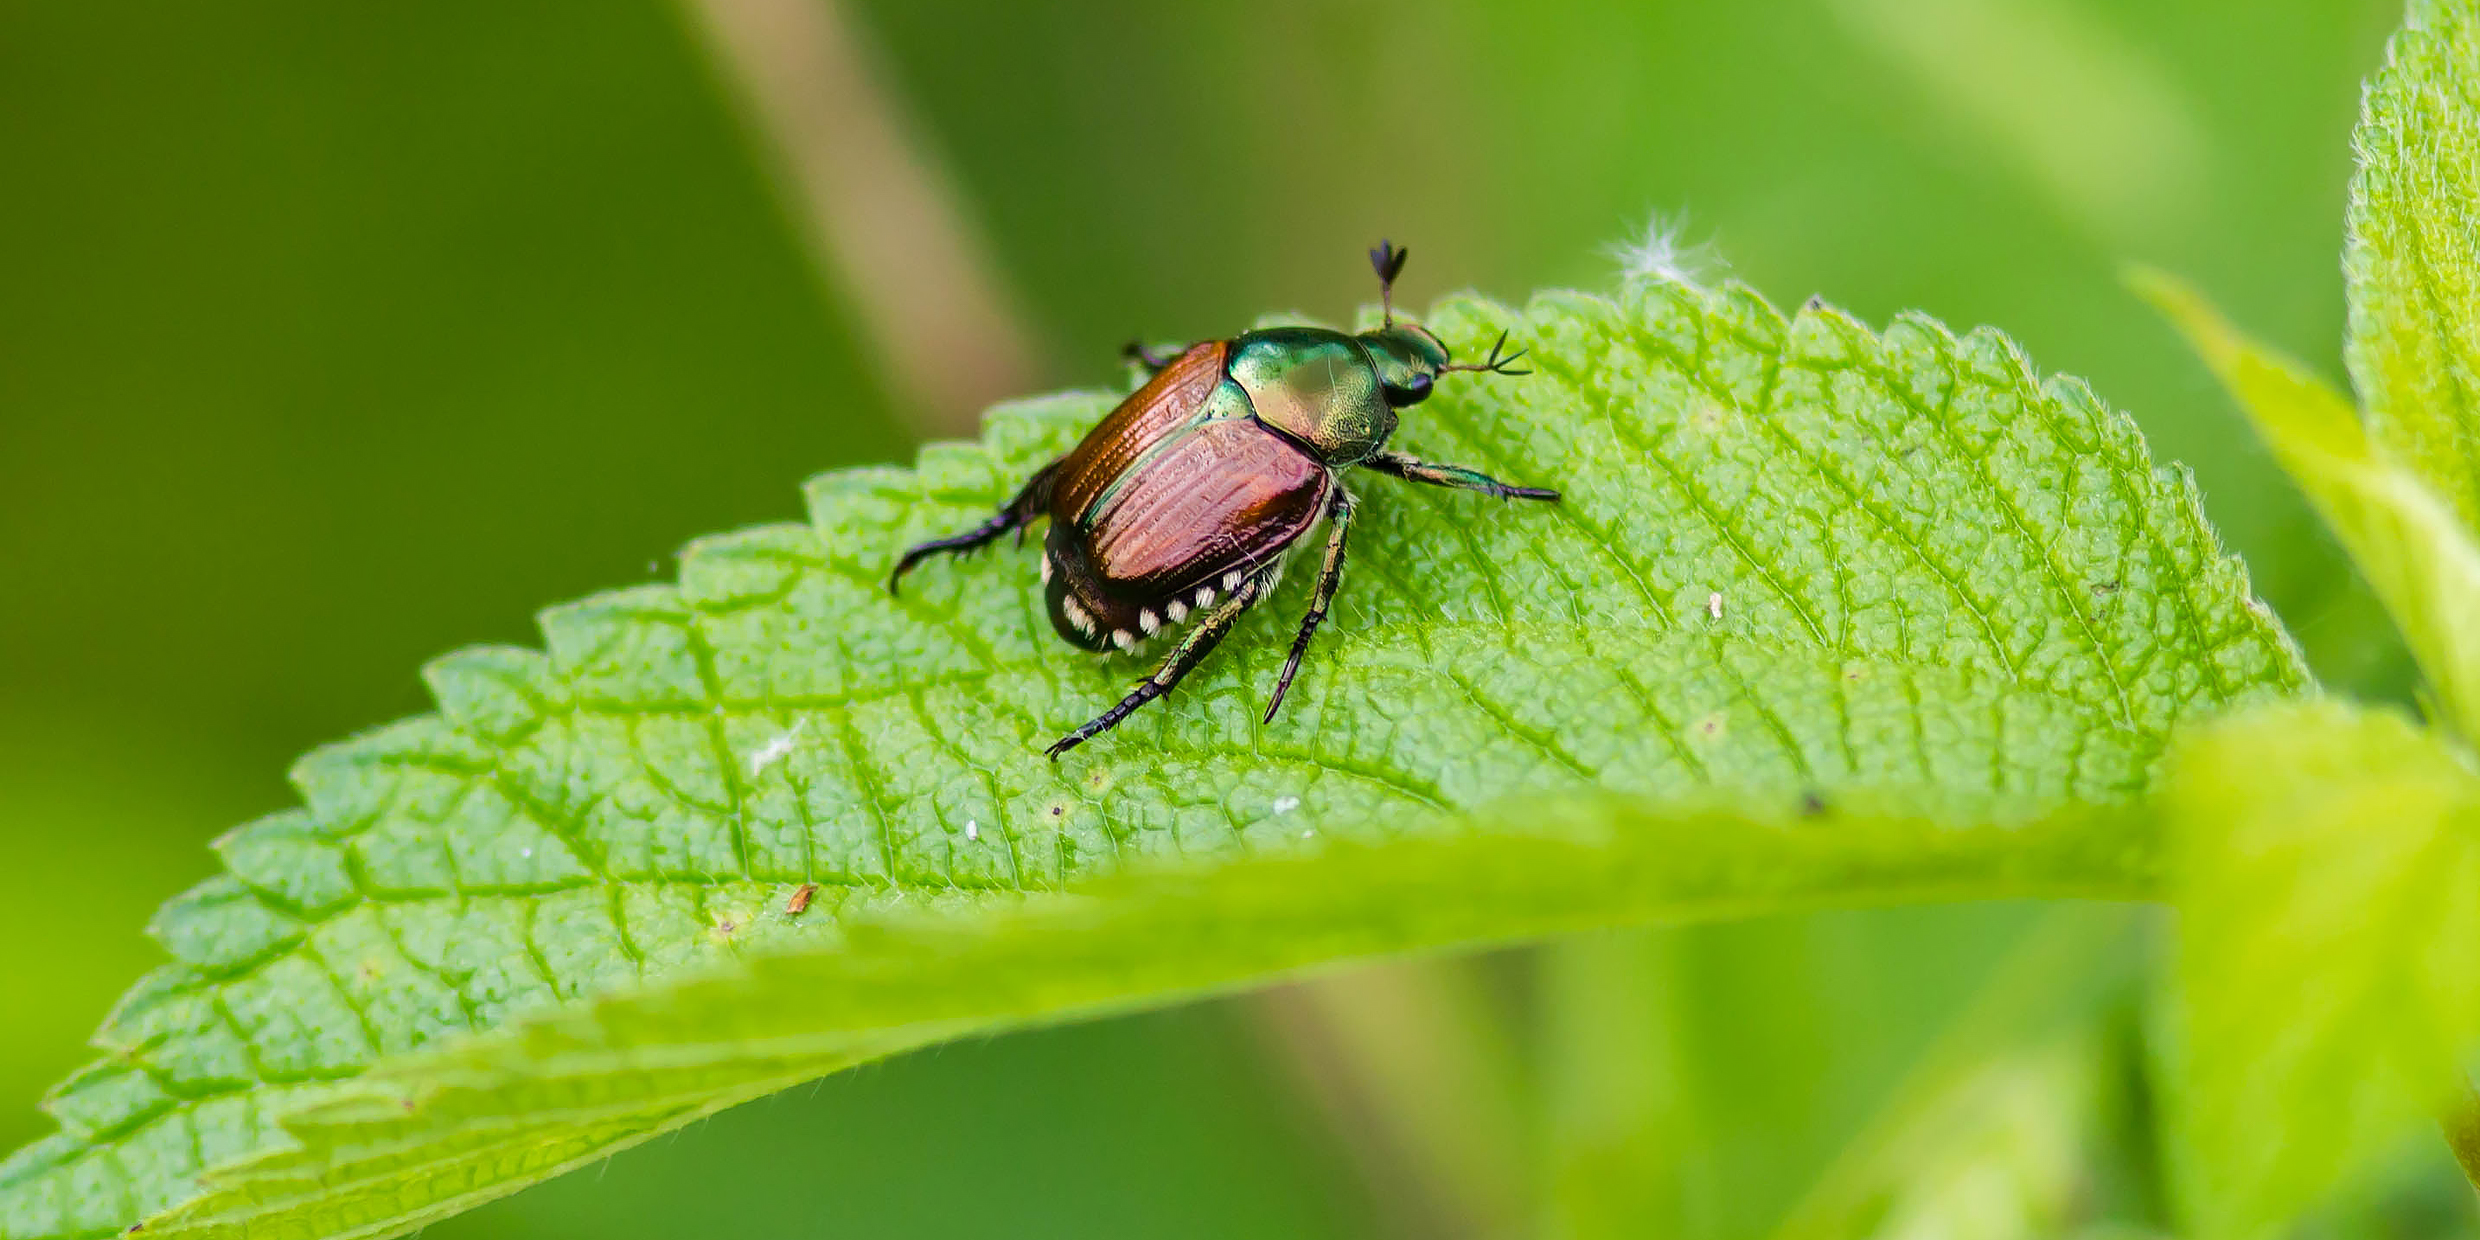 Image of a Japanese beetle on a plant leaf